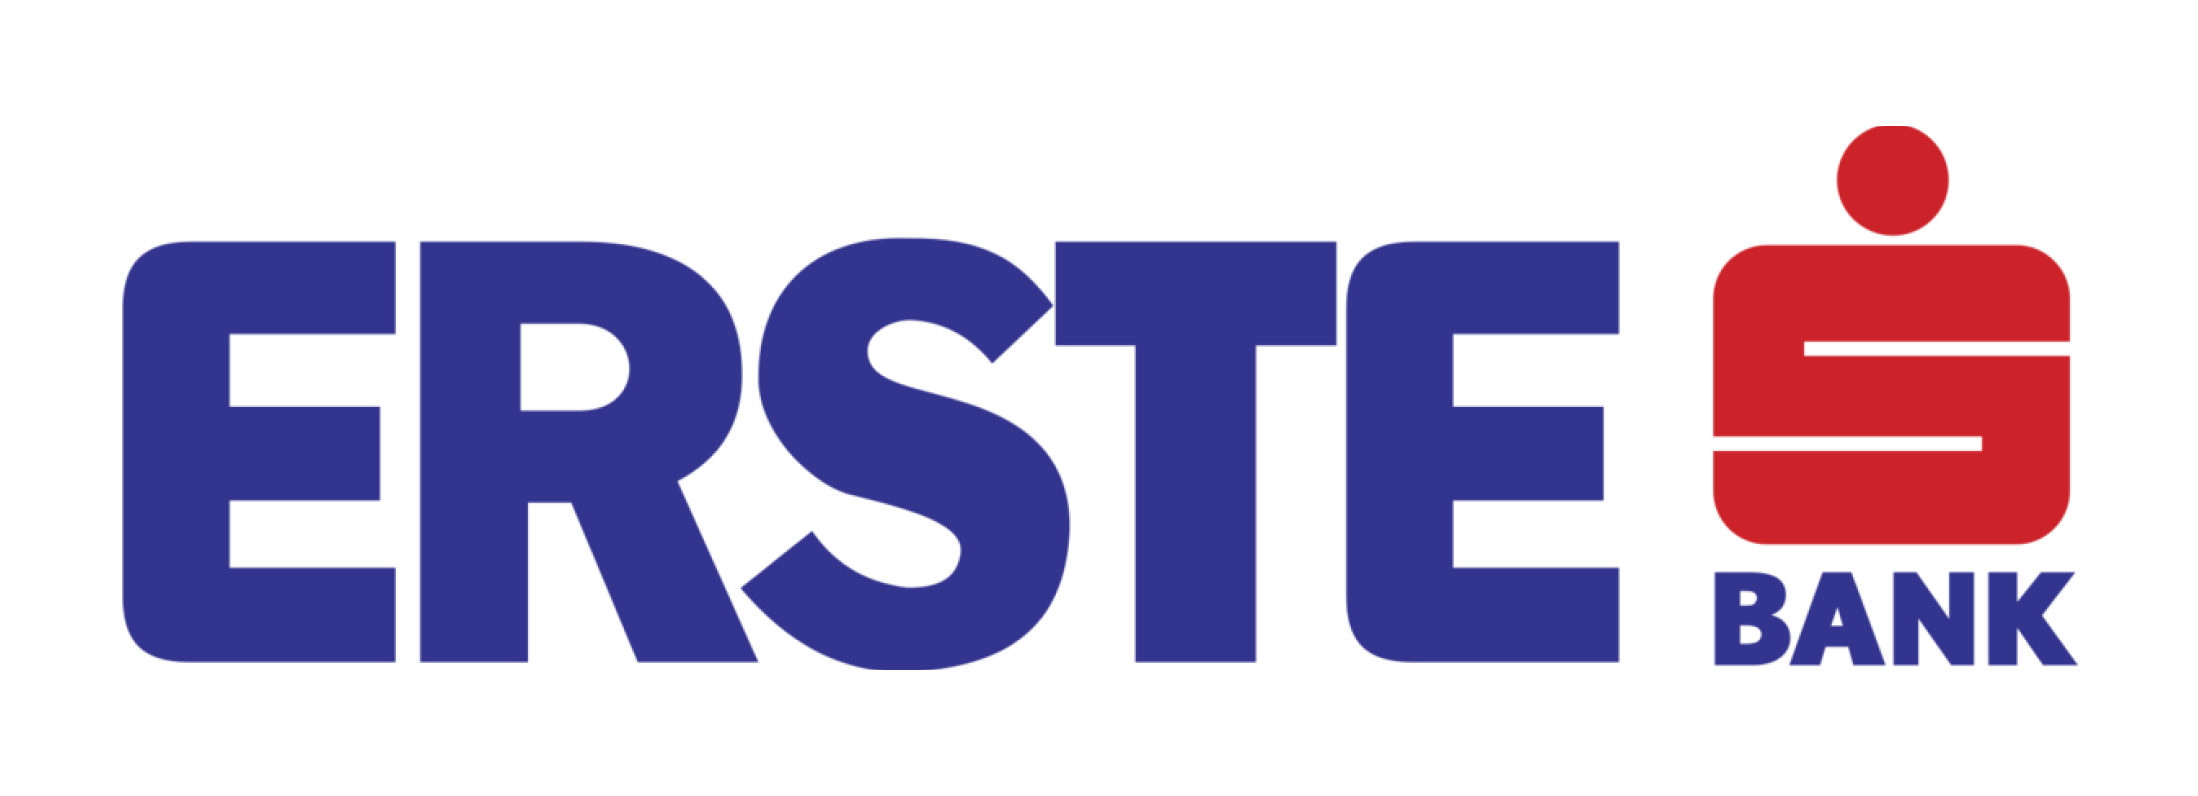 logo erste